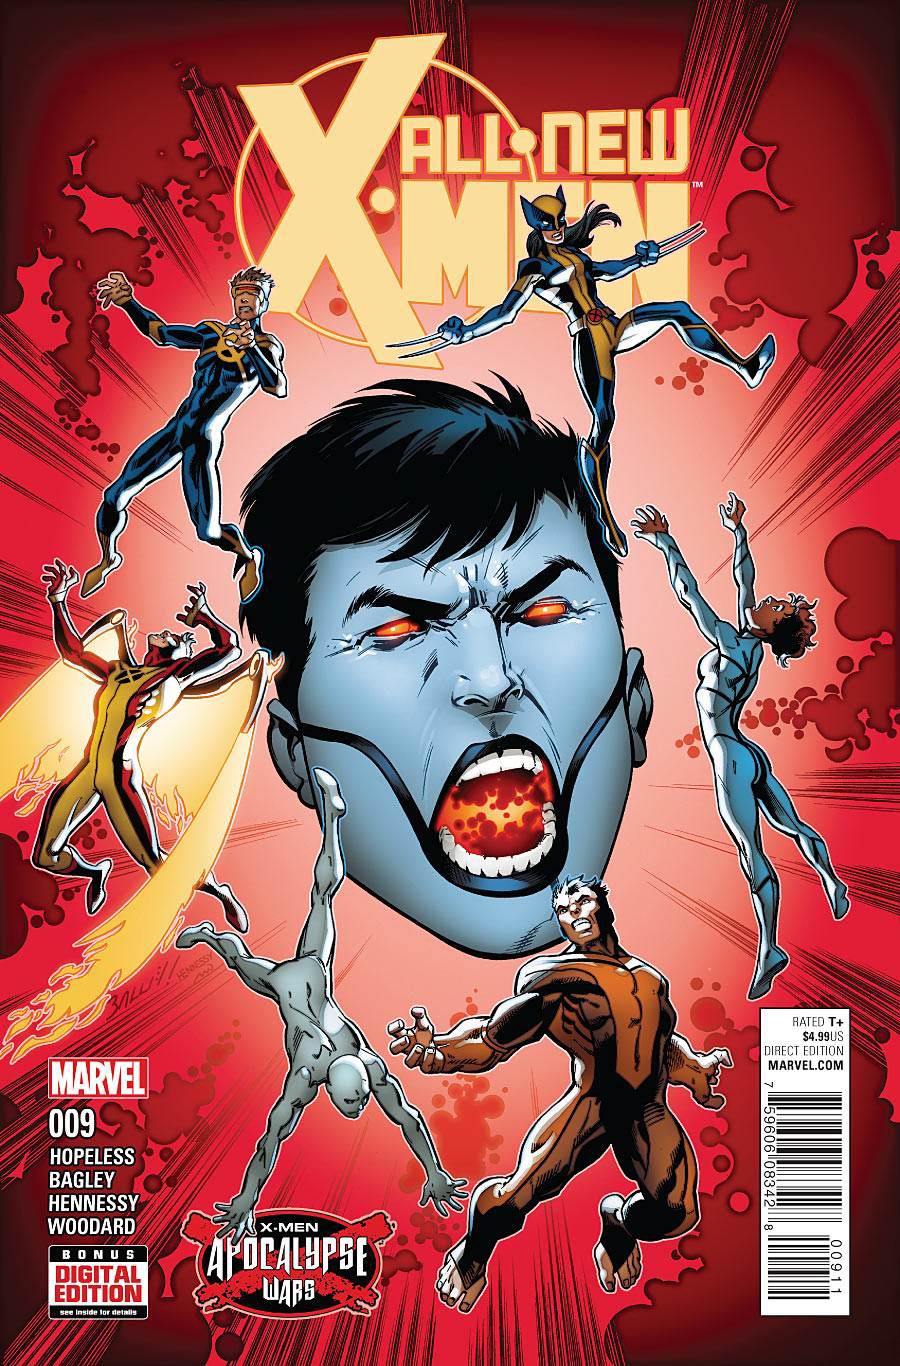 All-New X-Men Vol 2 #9 Cover A Regular Mark Bagley Cover (X-Men Apocalypse Wars Tie-In)